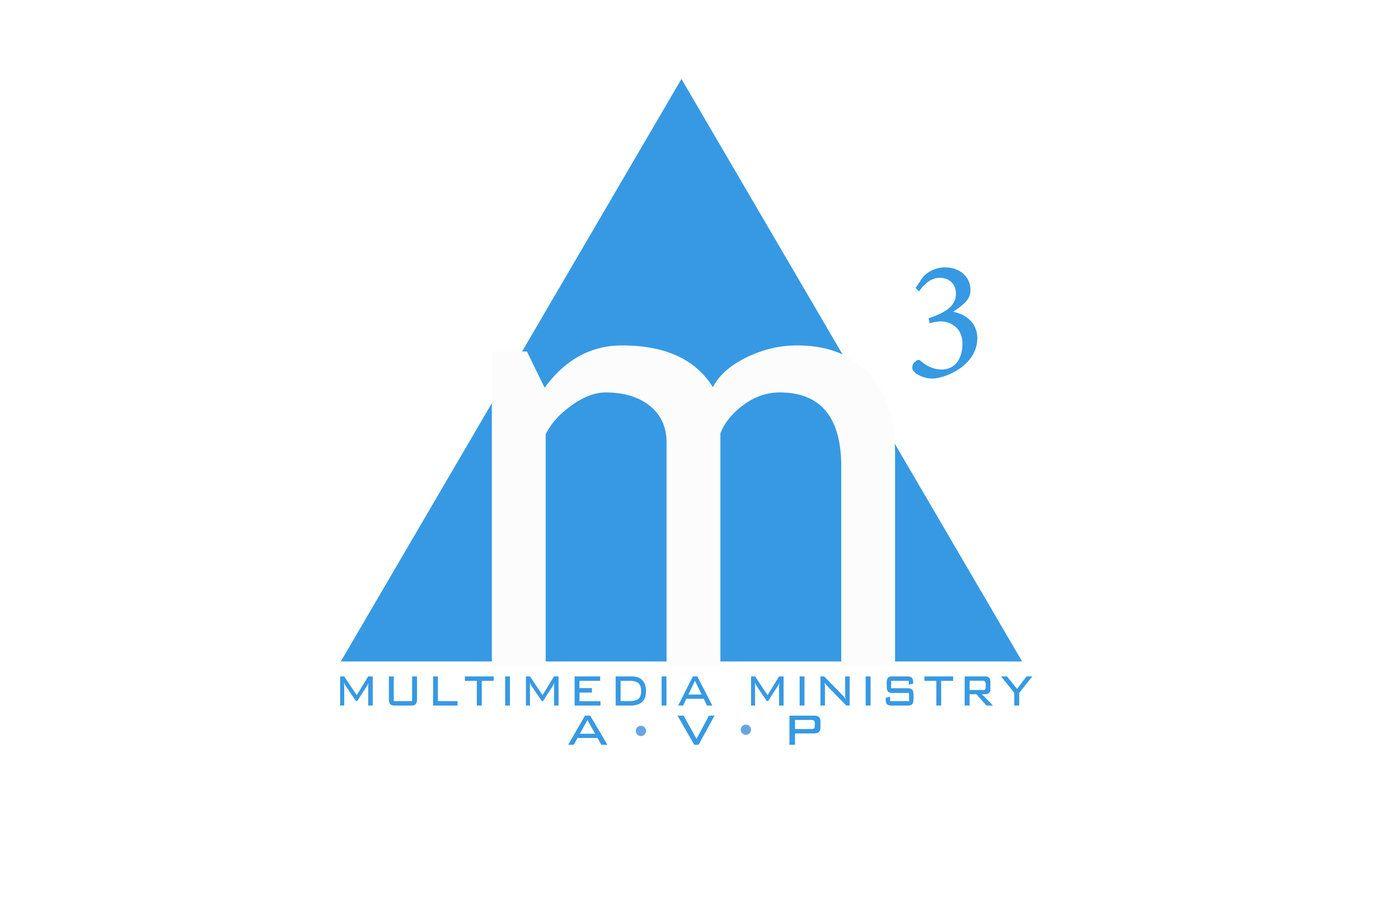 Multimedia Ministry Logo - Logos by Chris Tellyer at Coroflot.com